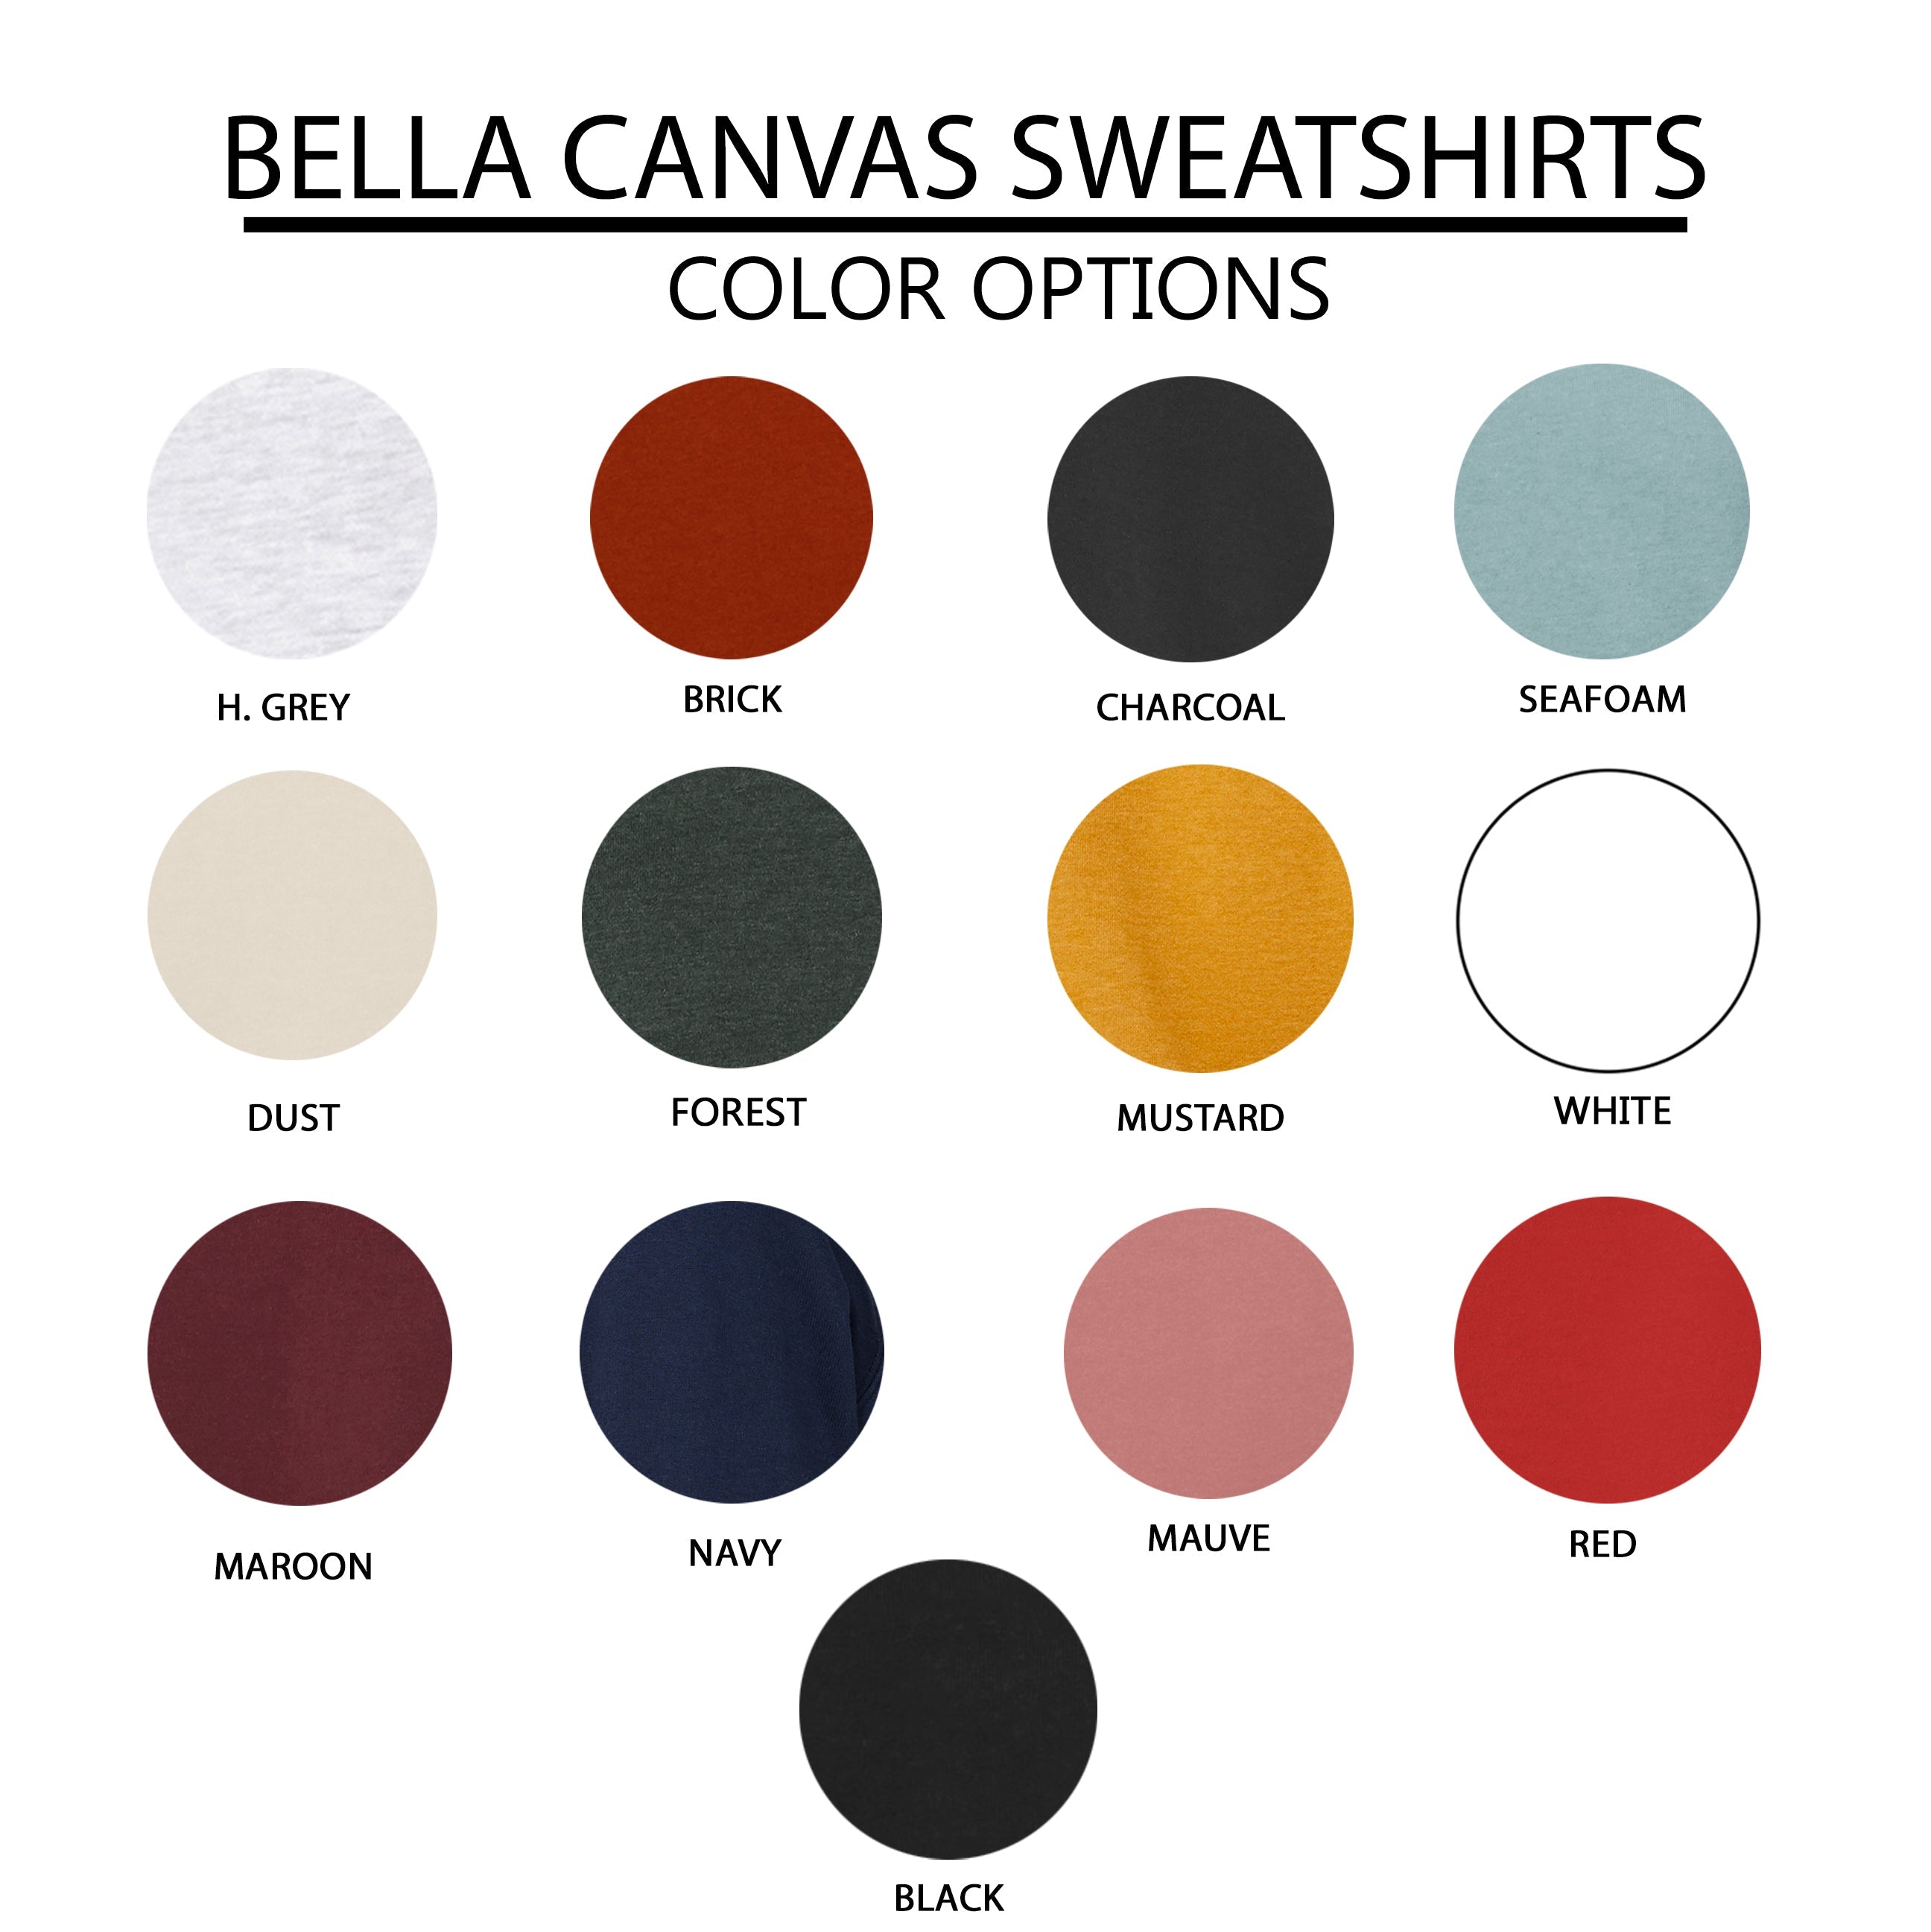 All American Cowboys Club | Bella Canvas Sweatshirt Olive and Ivory Retail